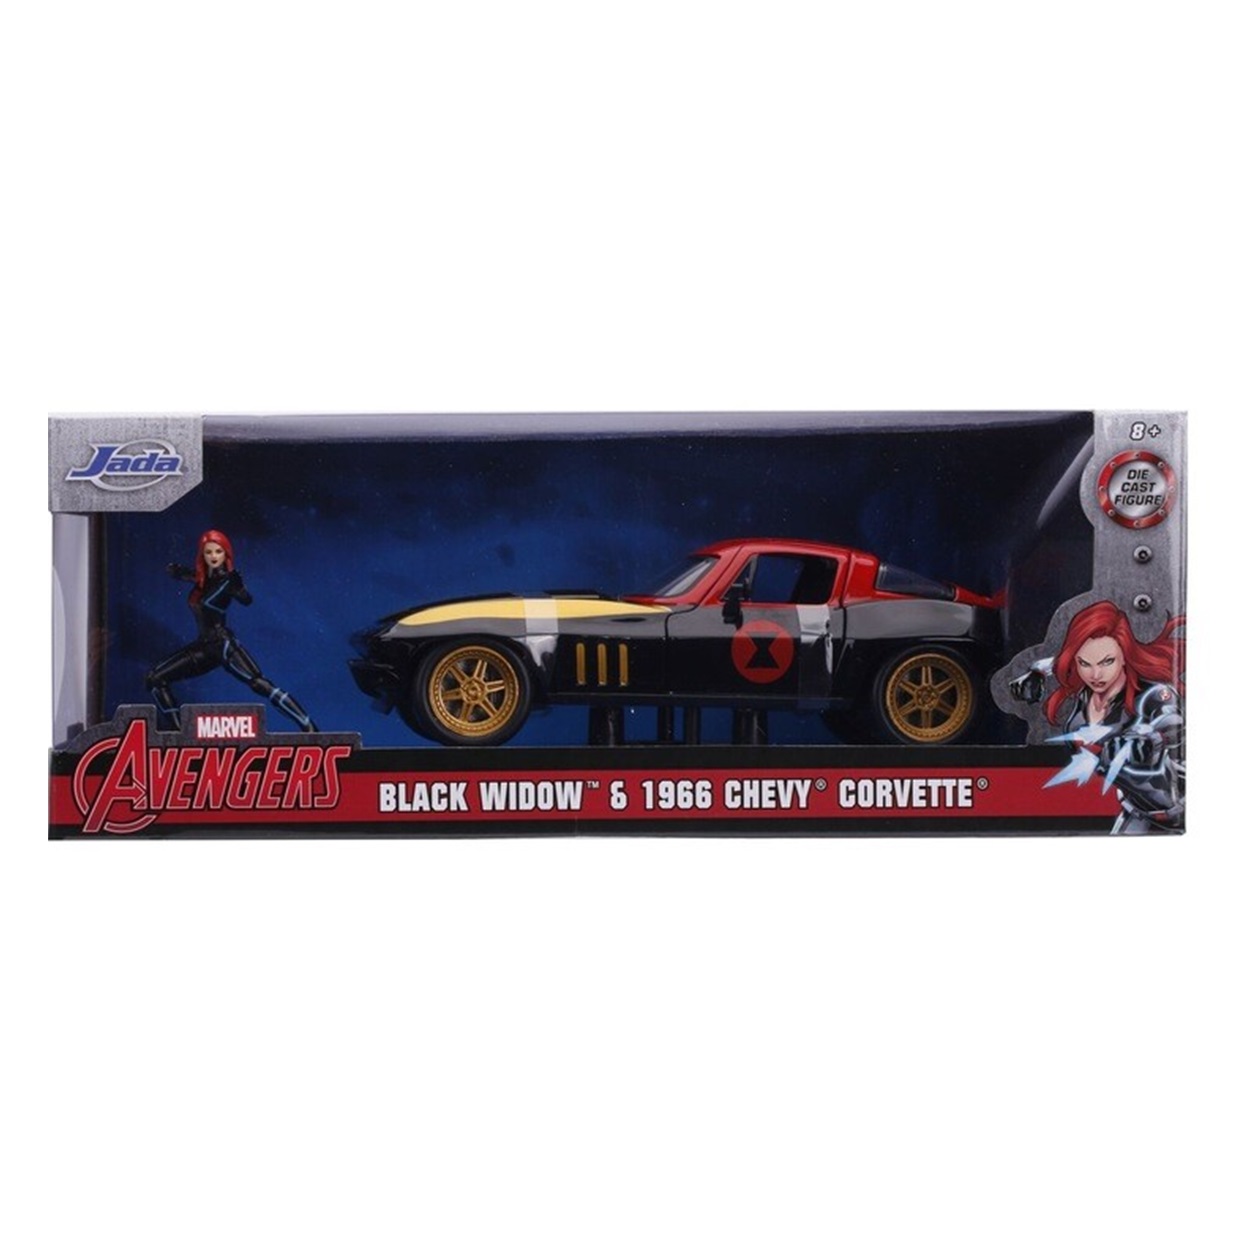 Black Widow & 1996 Chevy Corvette Marvel Avengers Jada Toys